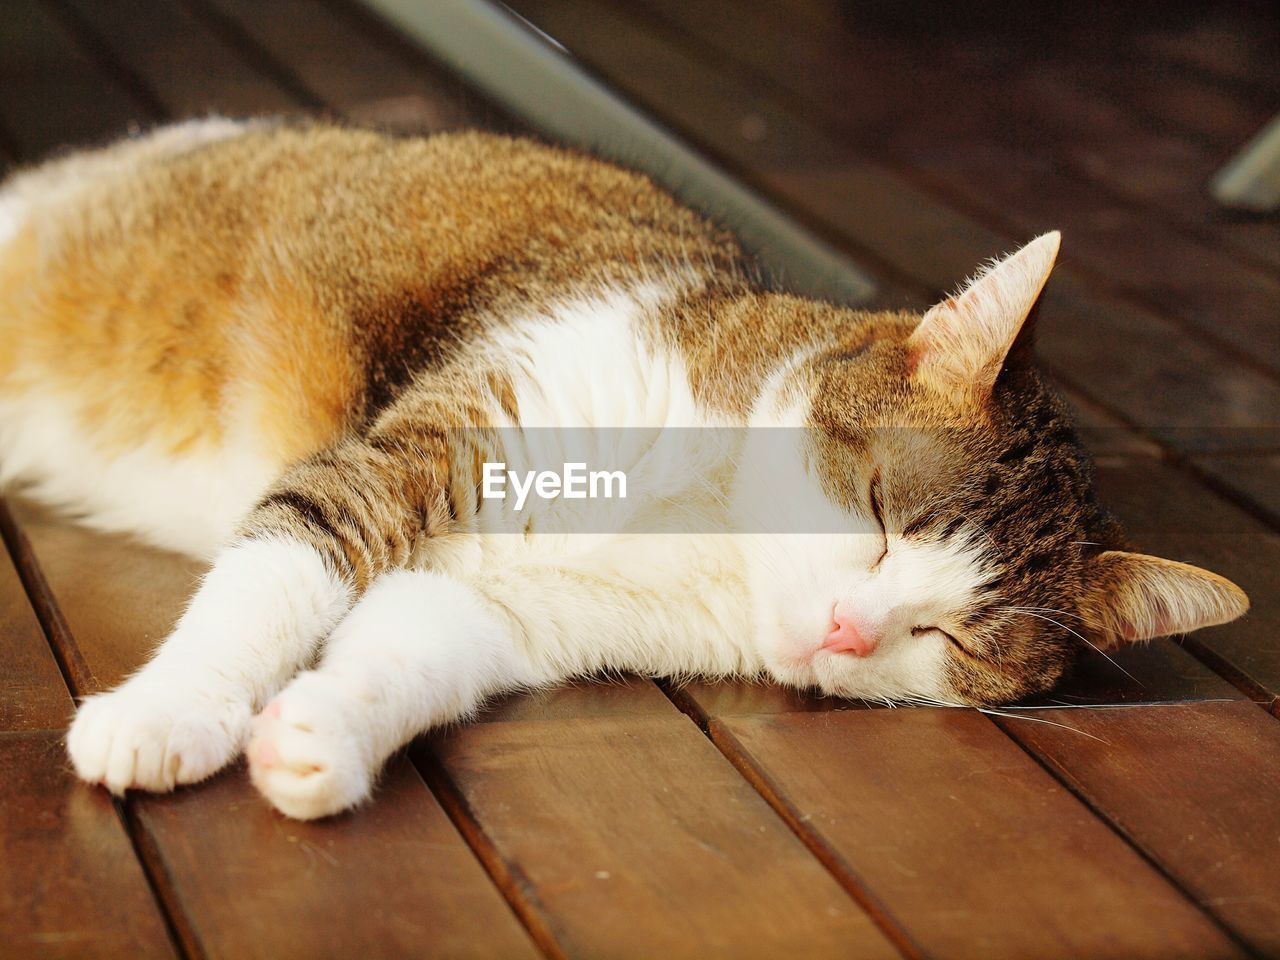 Close-up of cat sleeping on wooden floor